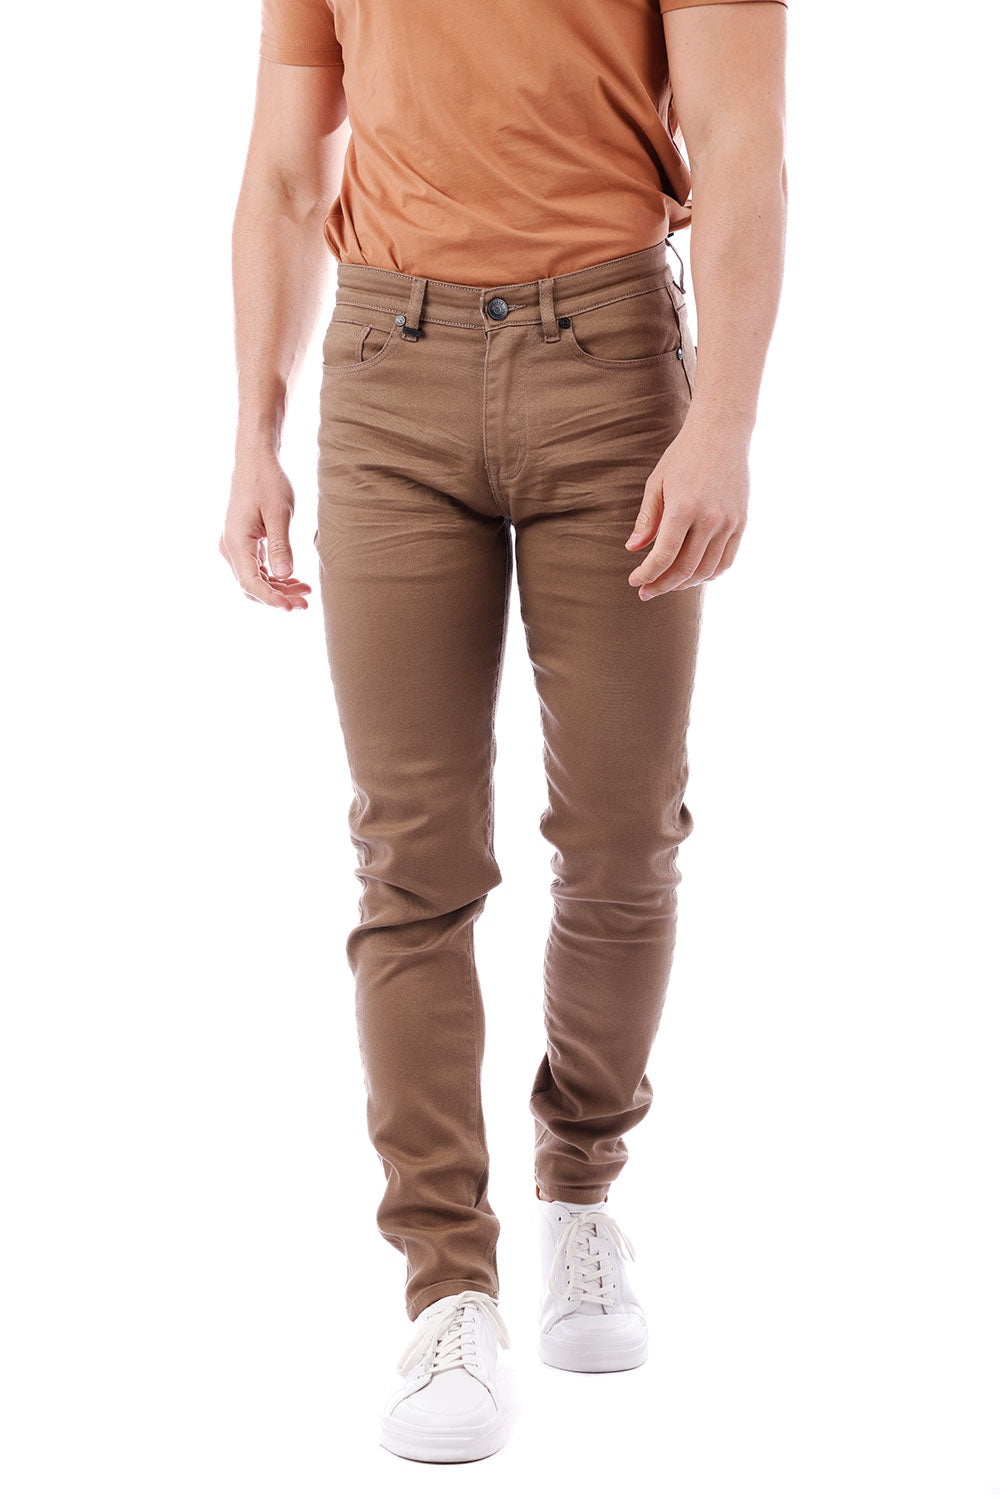 Barabas Men's Skinny Fit Classic Denim Solid Color Jeans 1700 Taupe